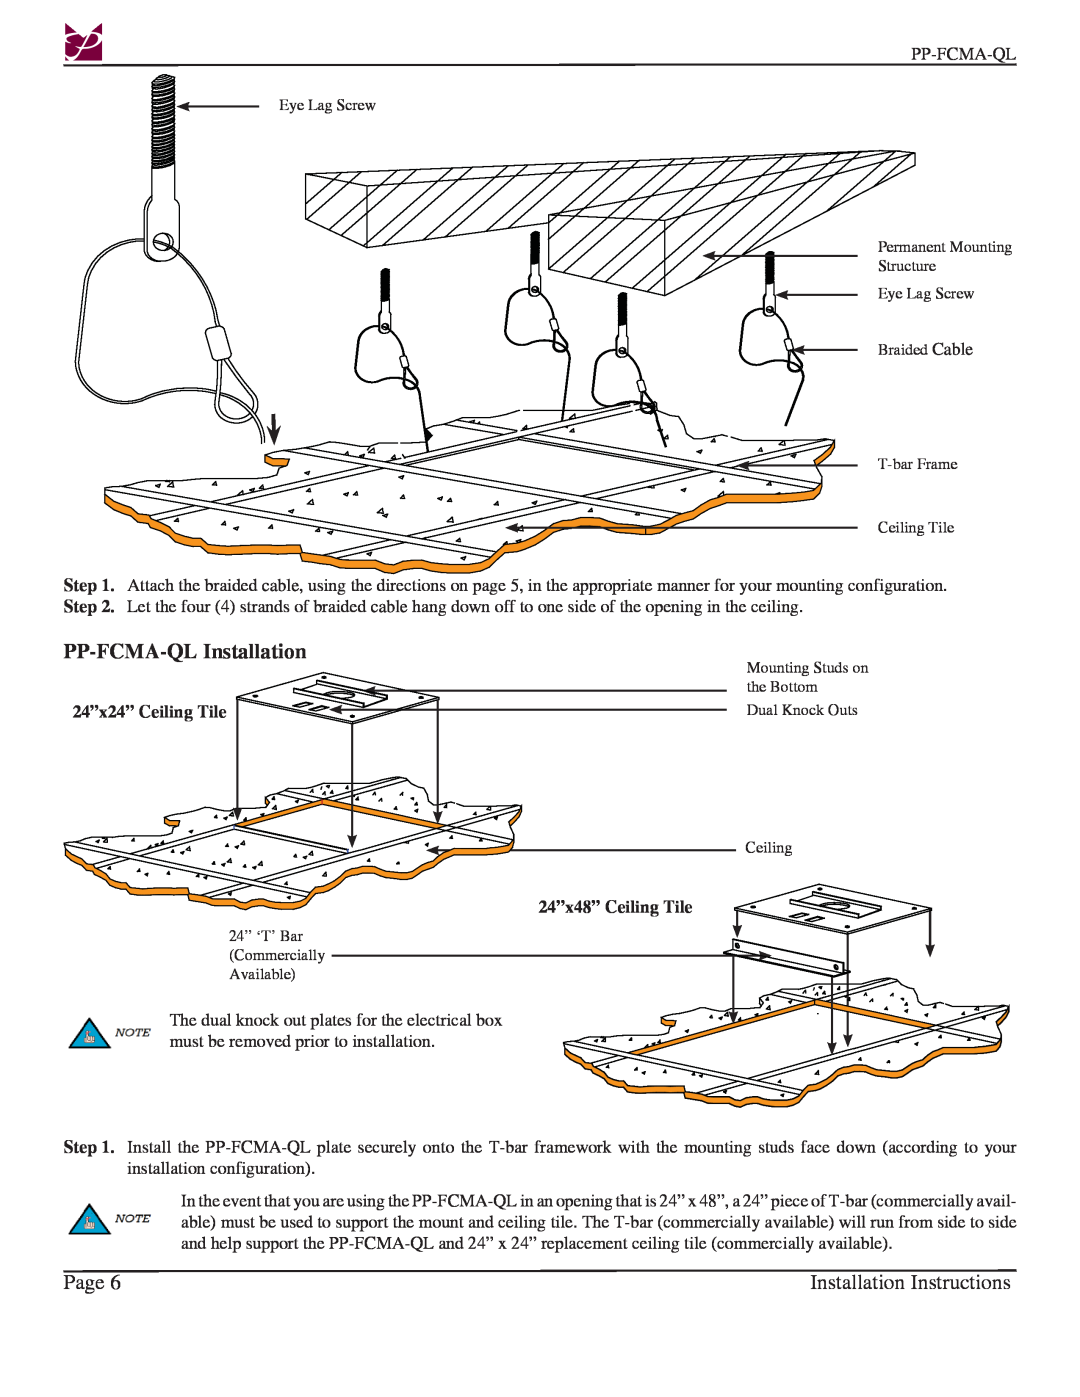 Premier Mounts installation instructions PP-FCMA-QLInstallation, 24”x24” Ceiling Tile, 24”x48” Ceiling Tile 